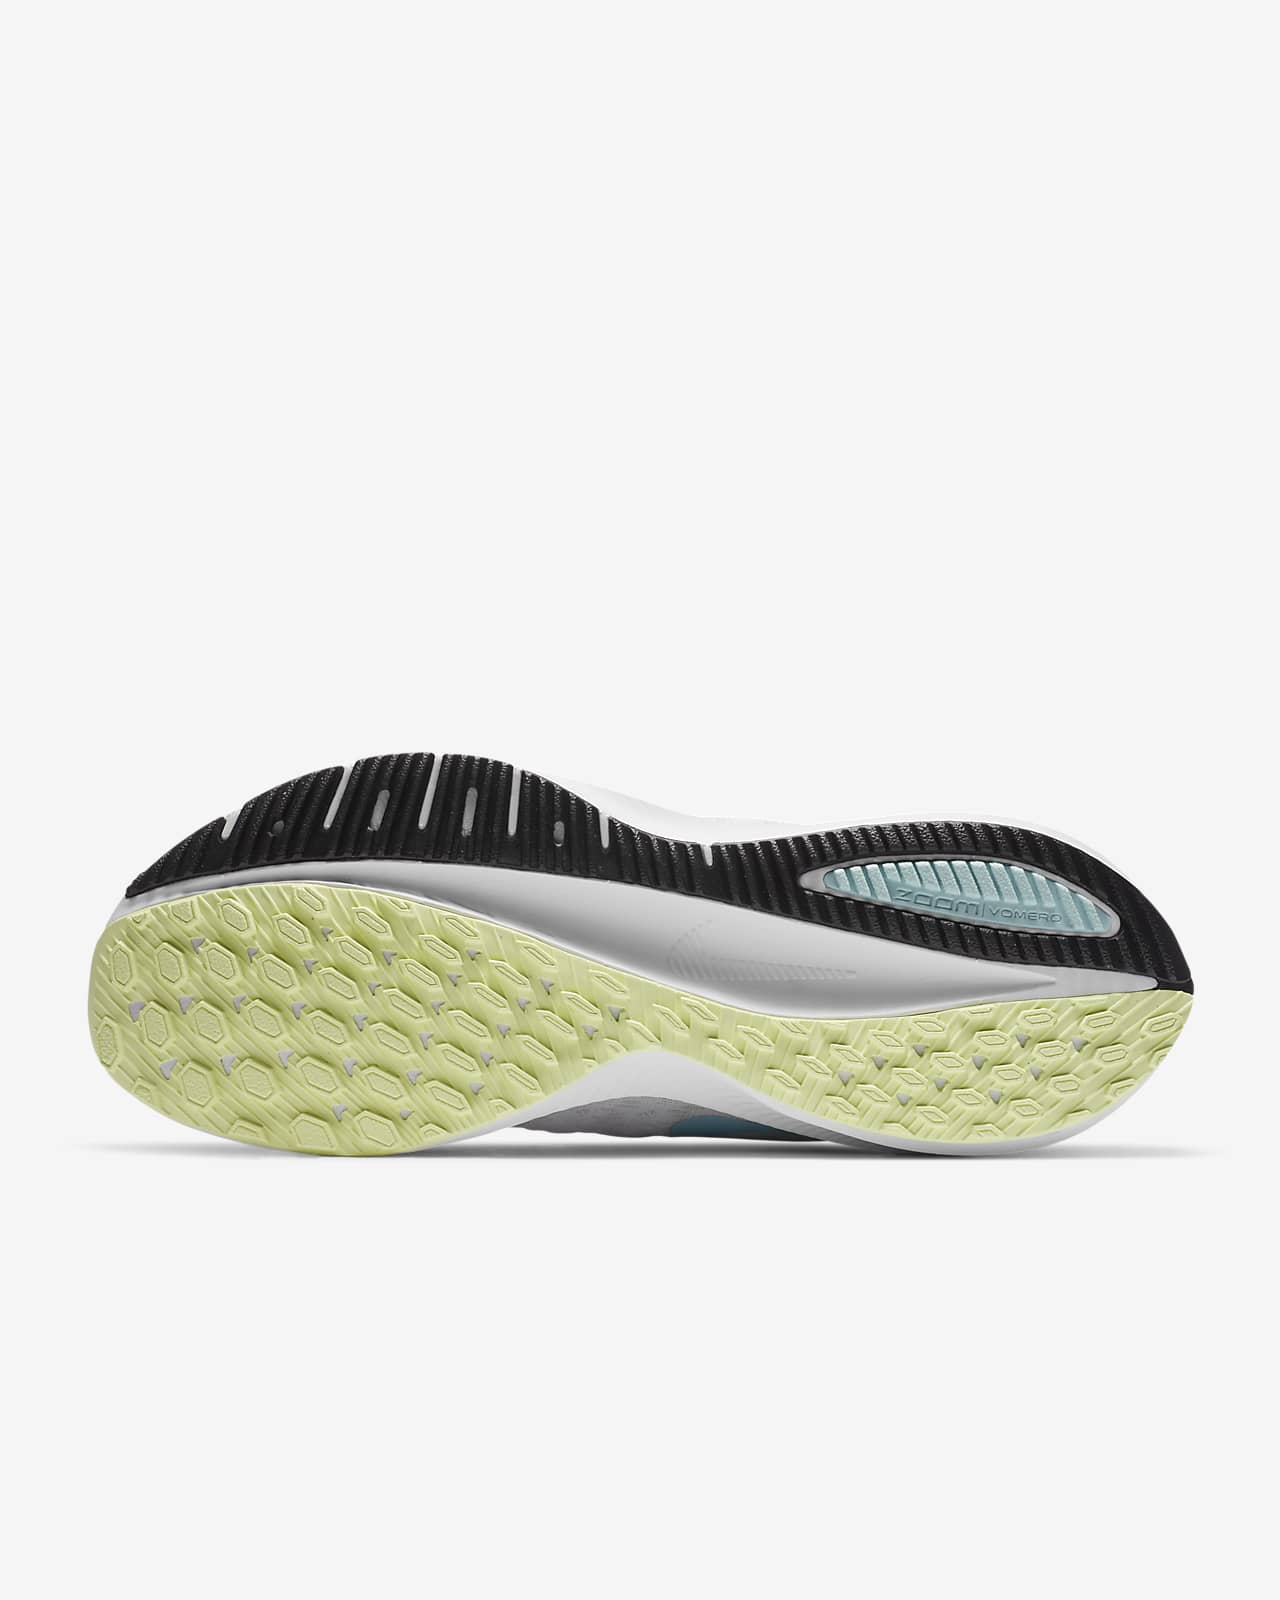 اليكساندرا Nike Air Zoom Vomero 14 Women's Running Shoe اليكساندرا